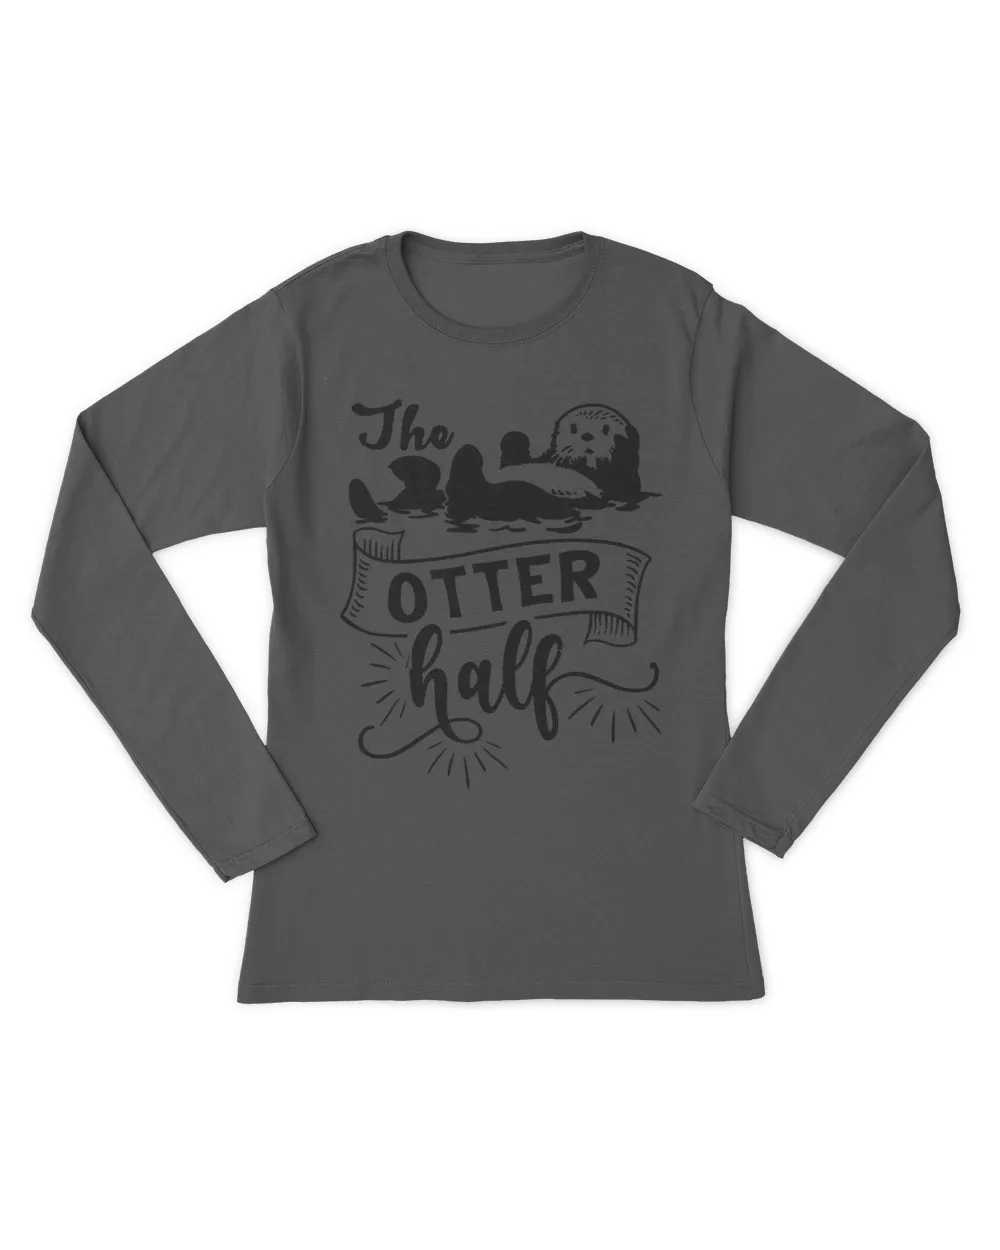 The Better Half 2The Otter Half 2Cute Valentine